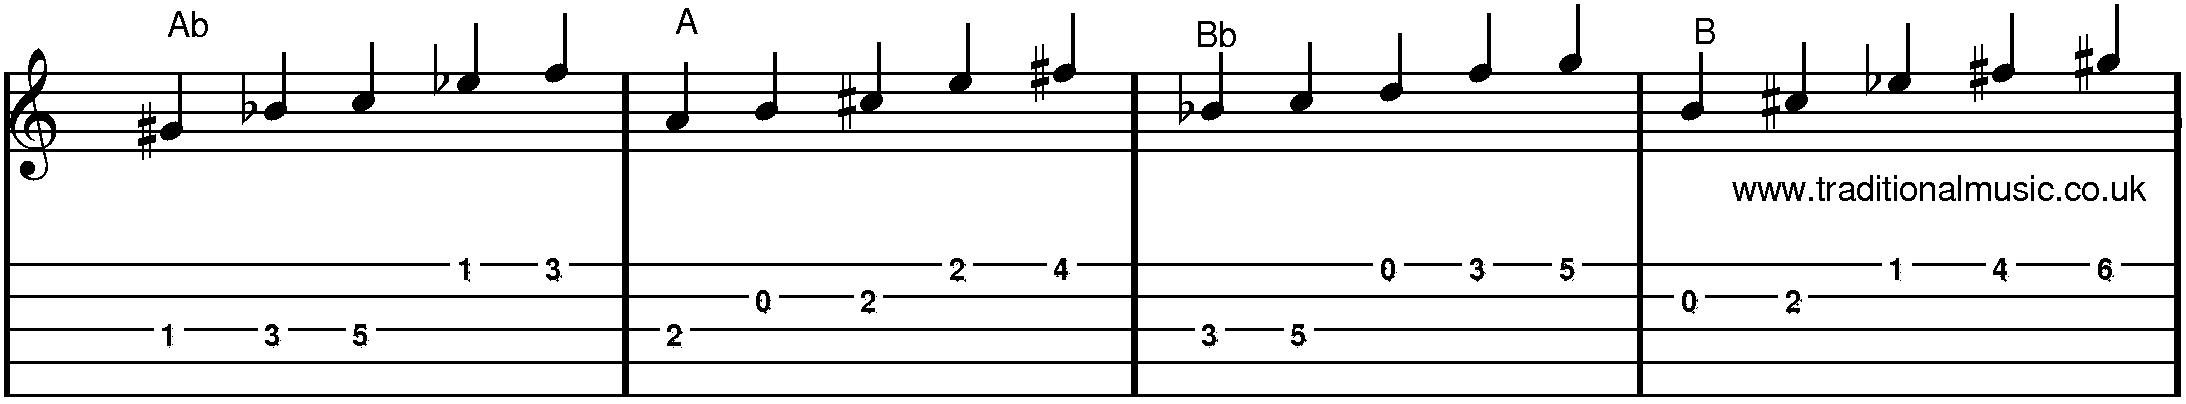 Major Pentatonic Scales for Banjo Ab to B